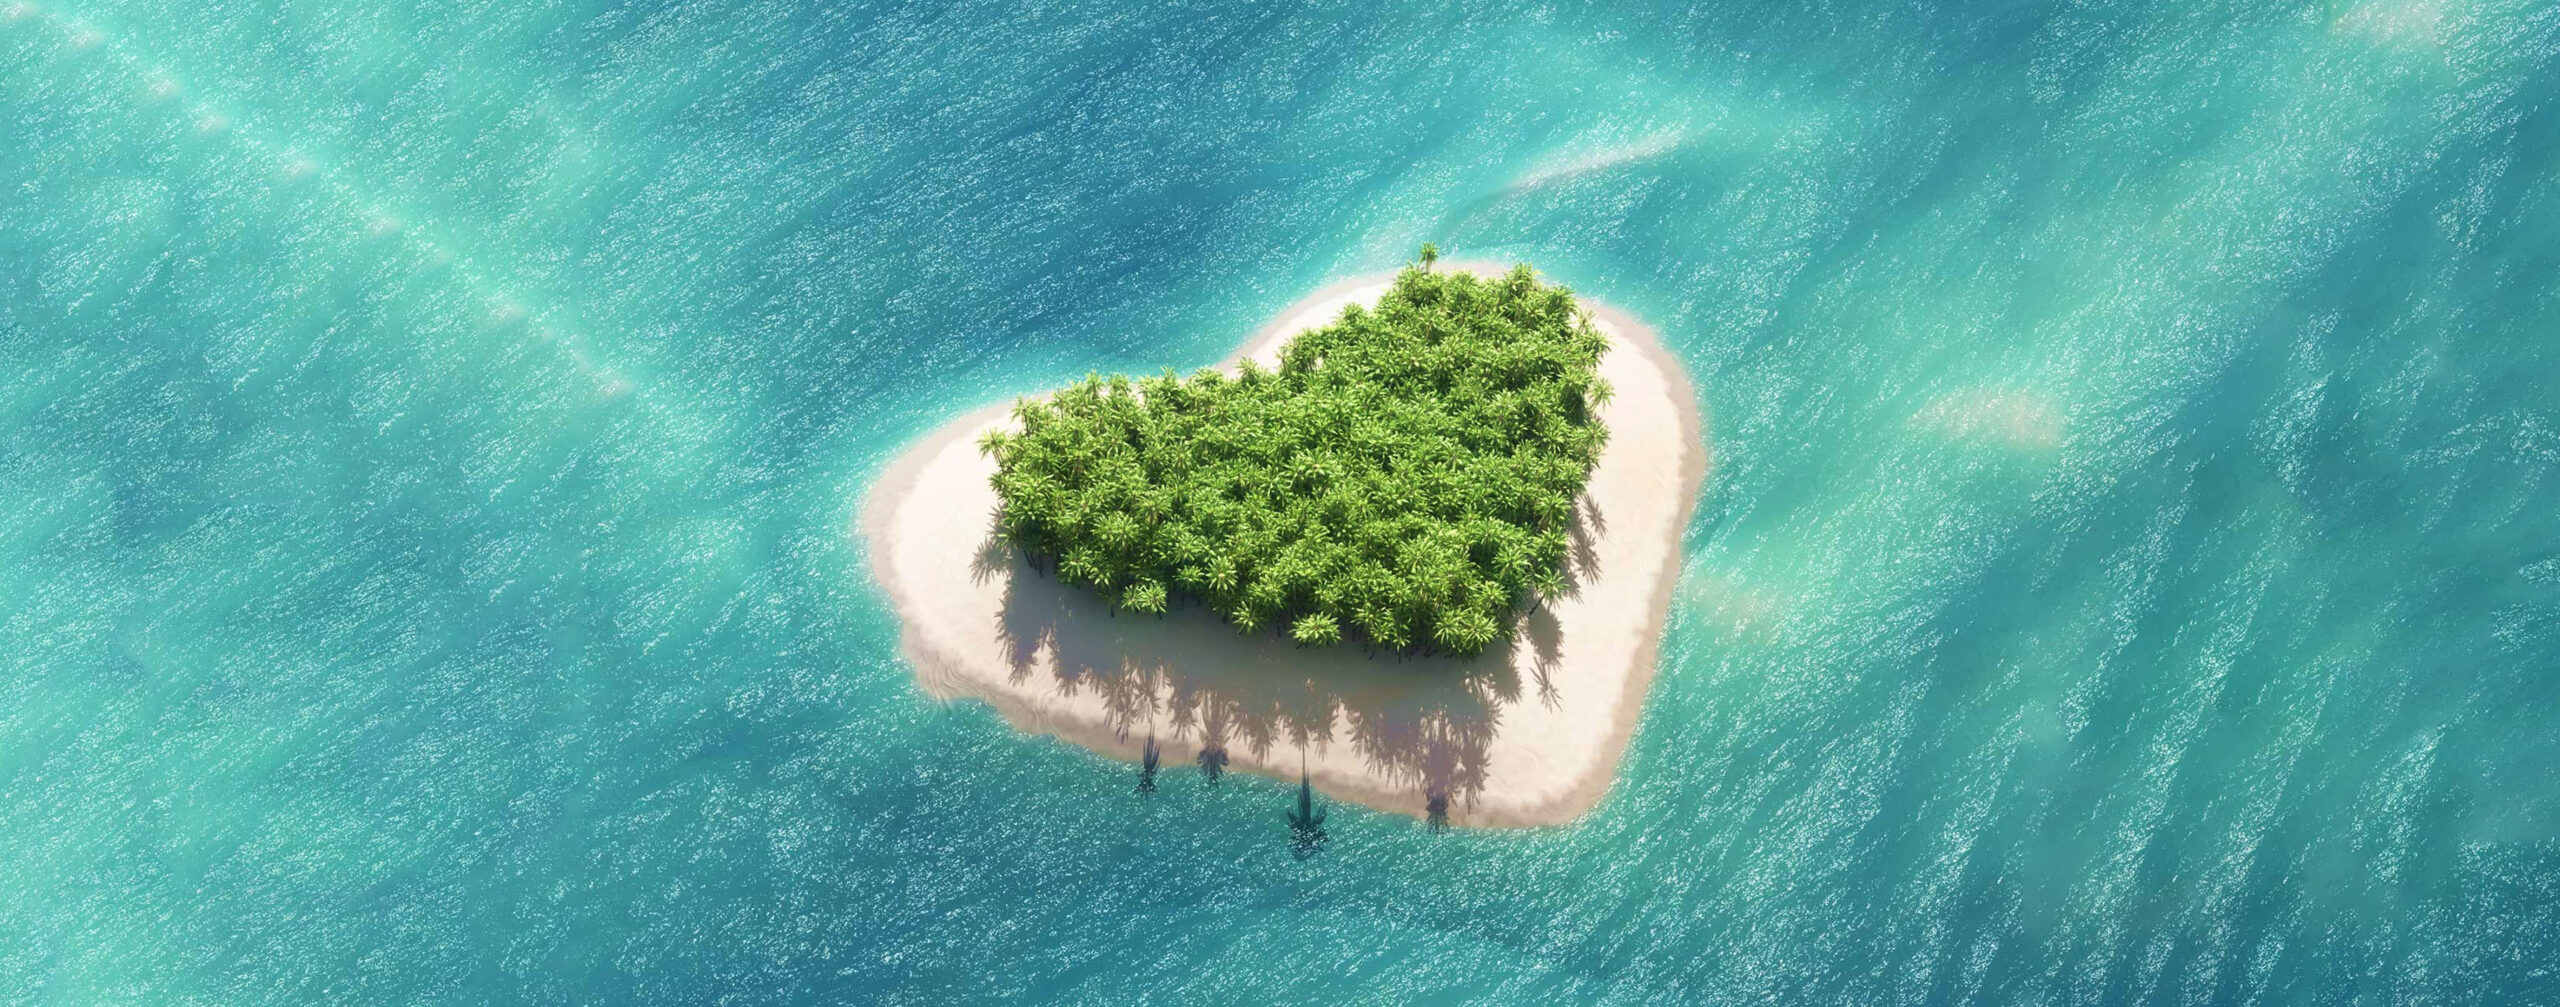 Missing Love Island?